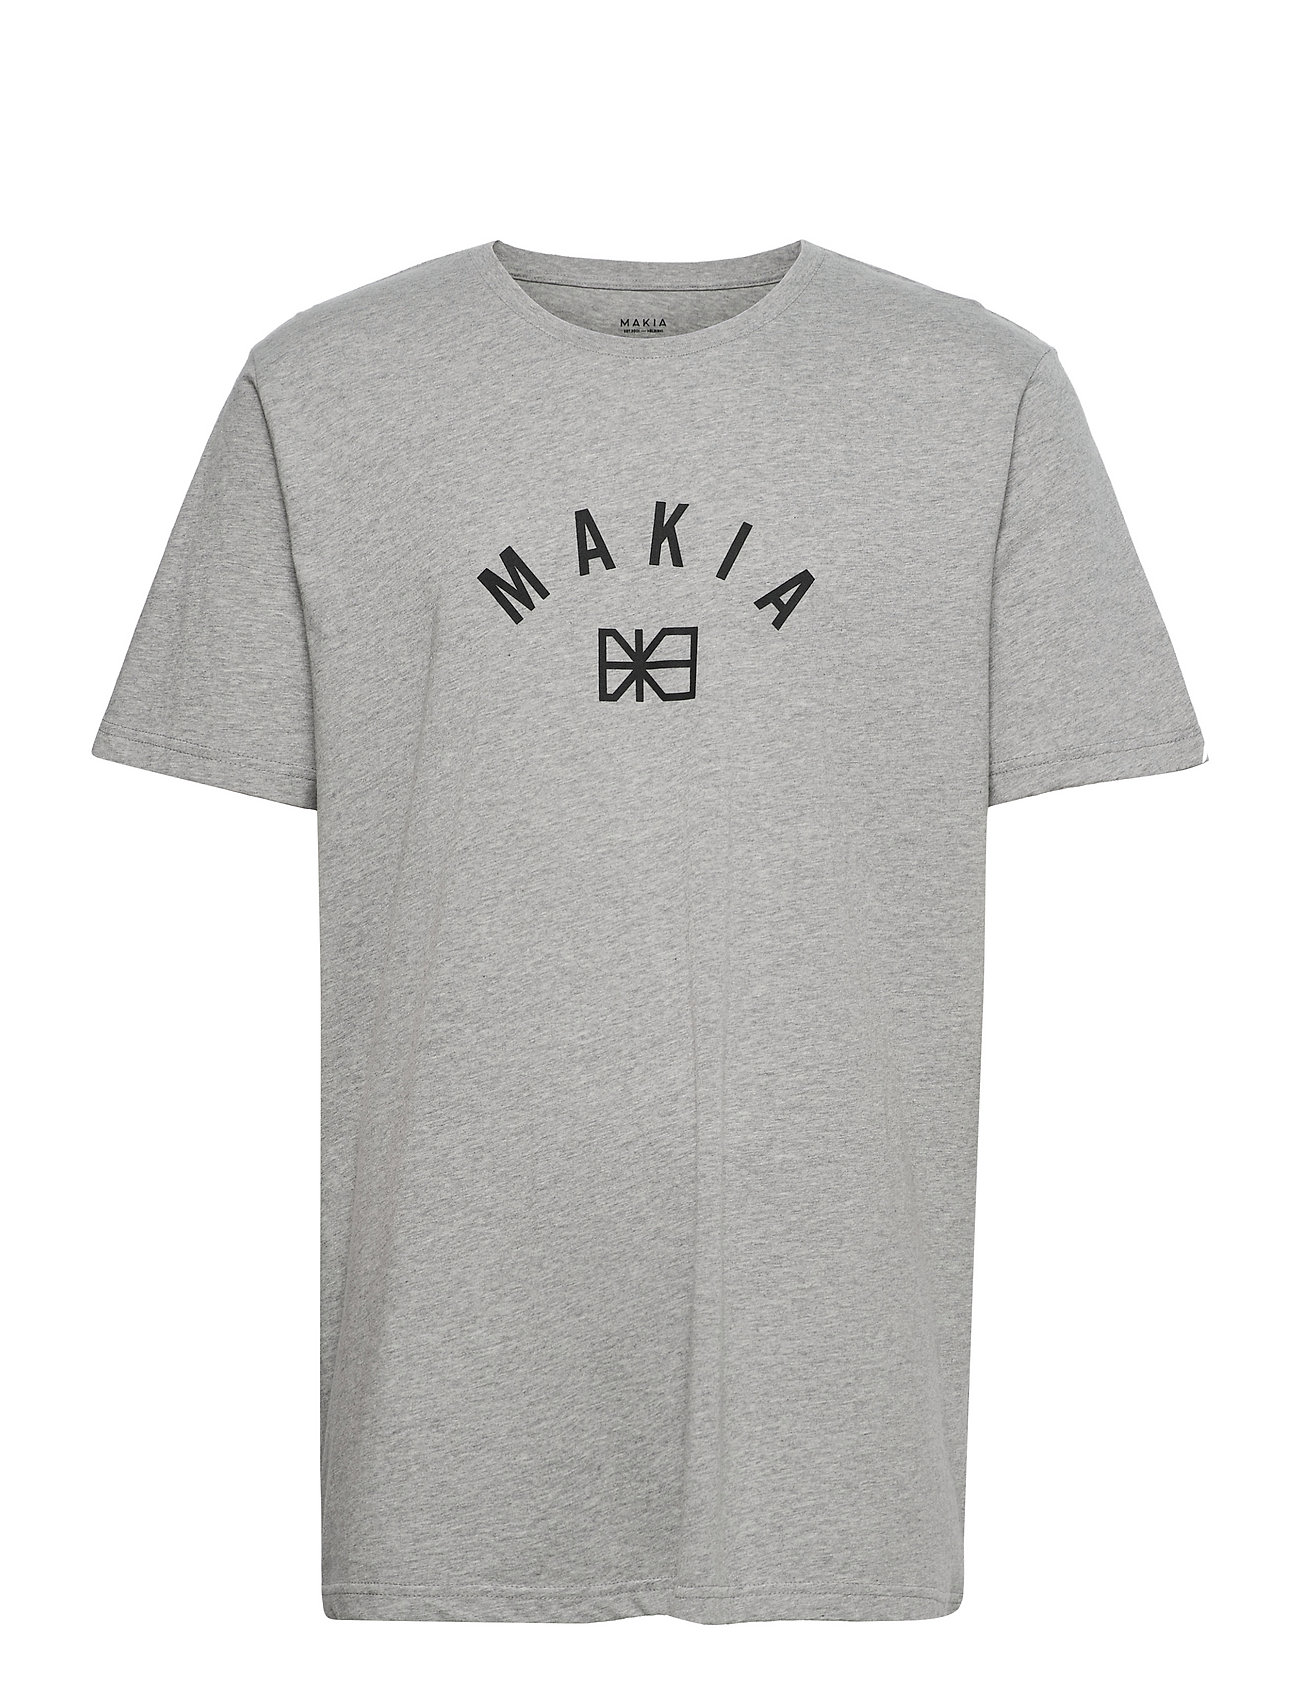 Brand T-Shirt T-shirts Short-sleeved Harmaa Makia